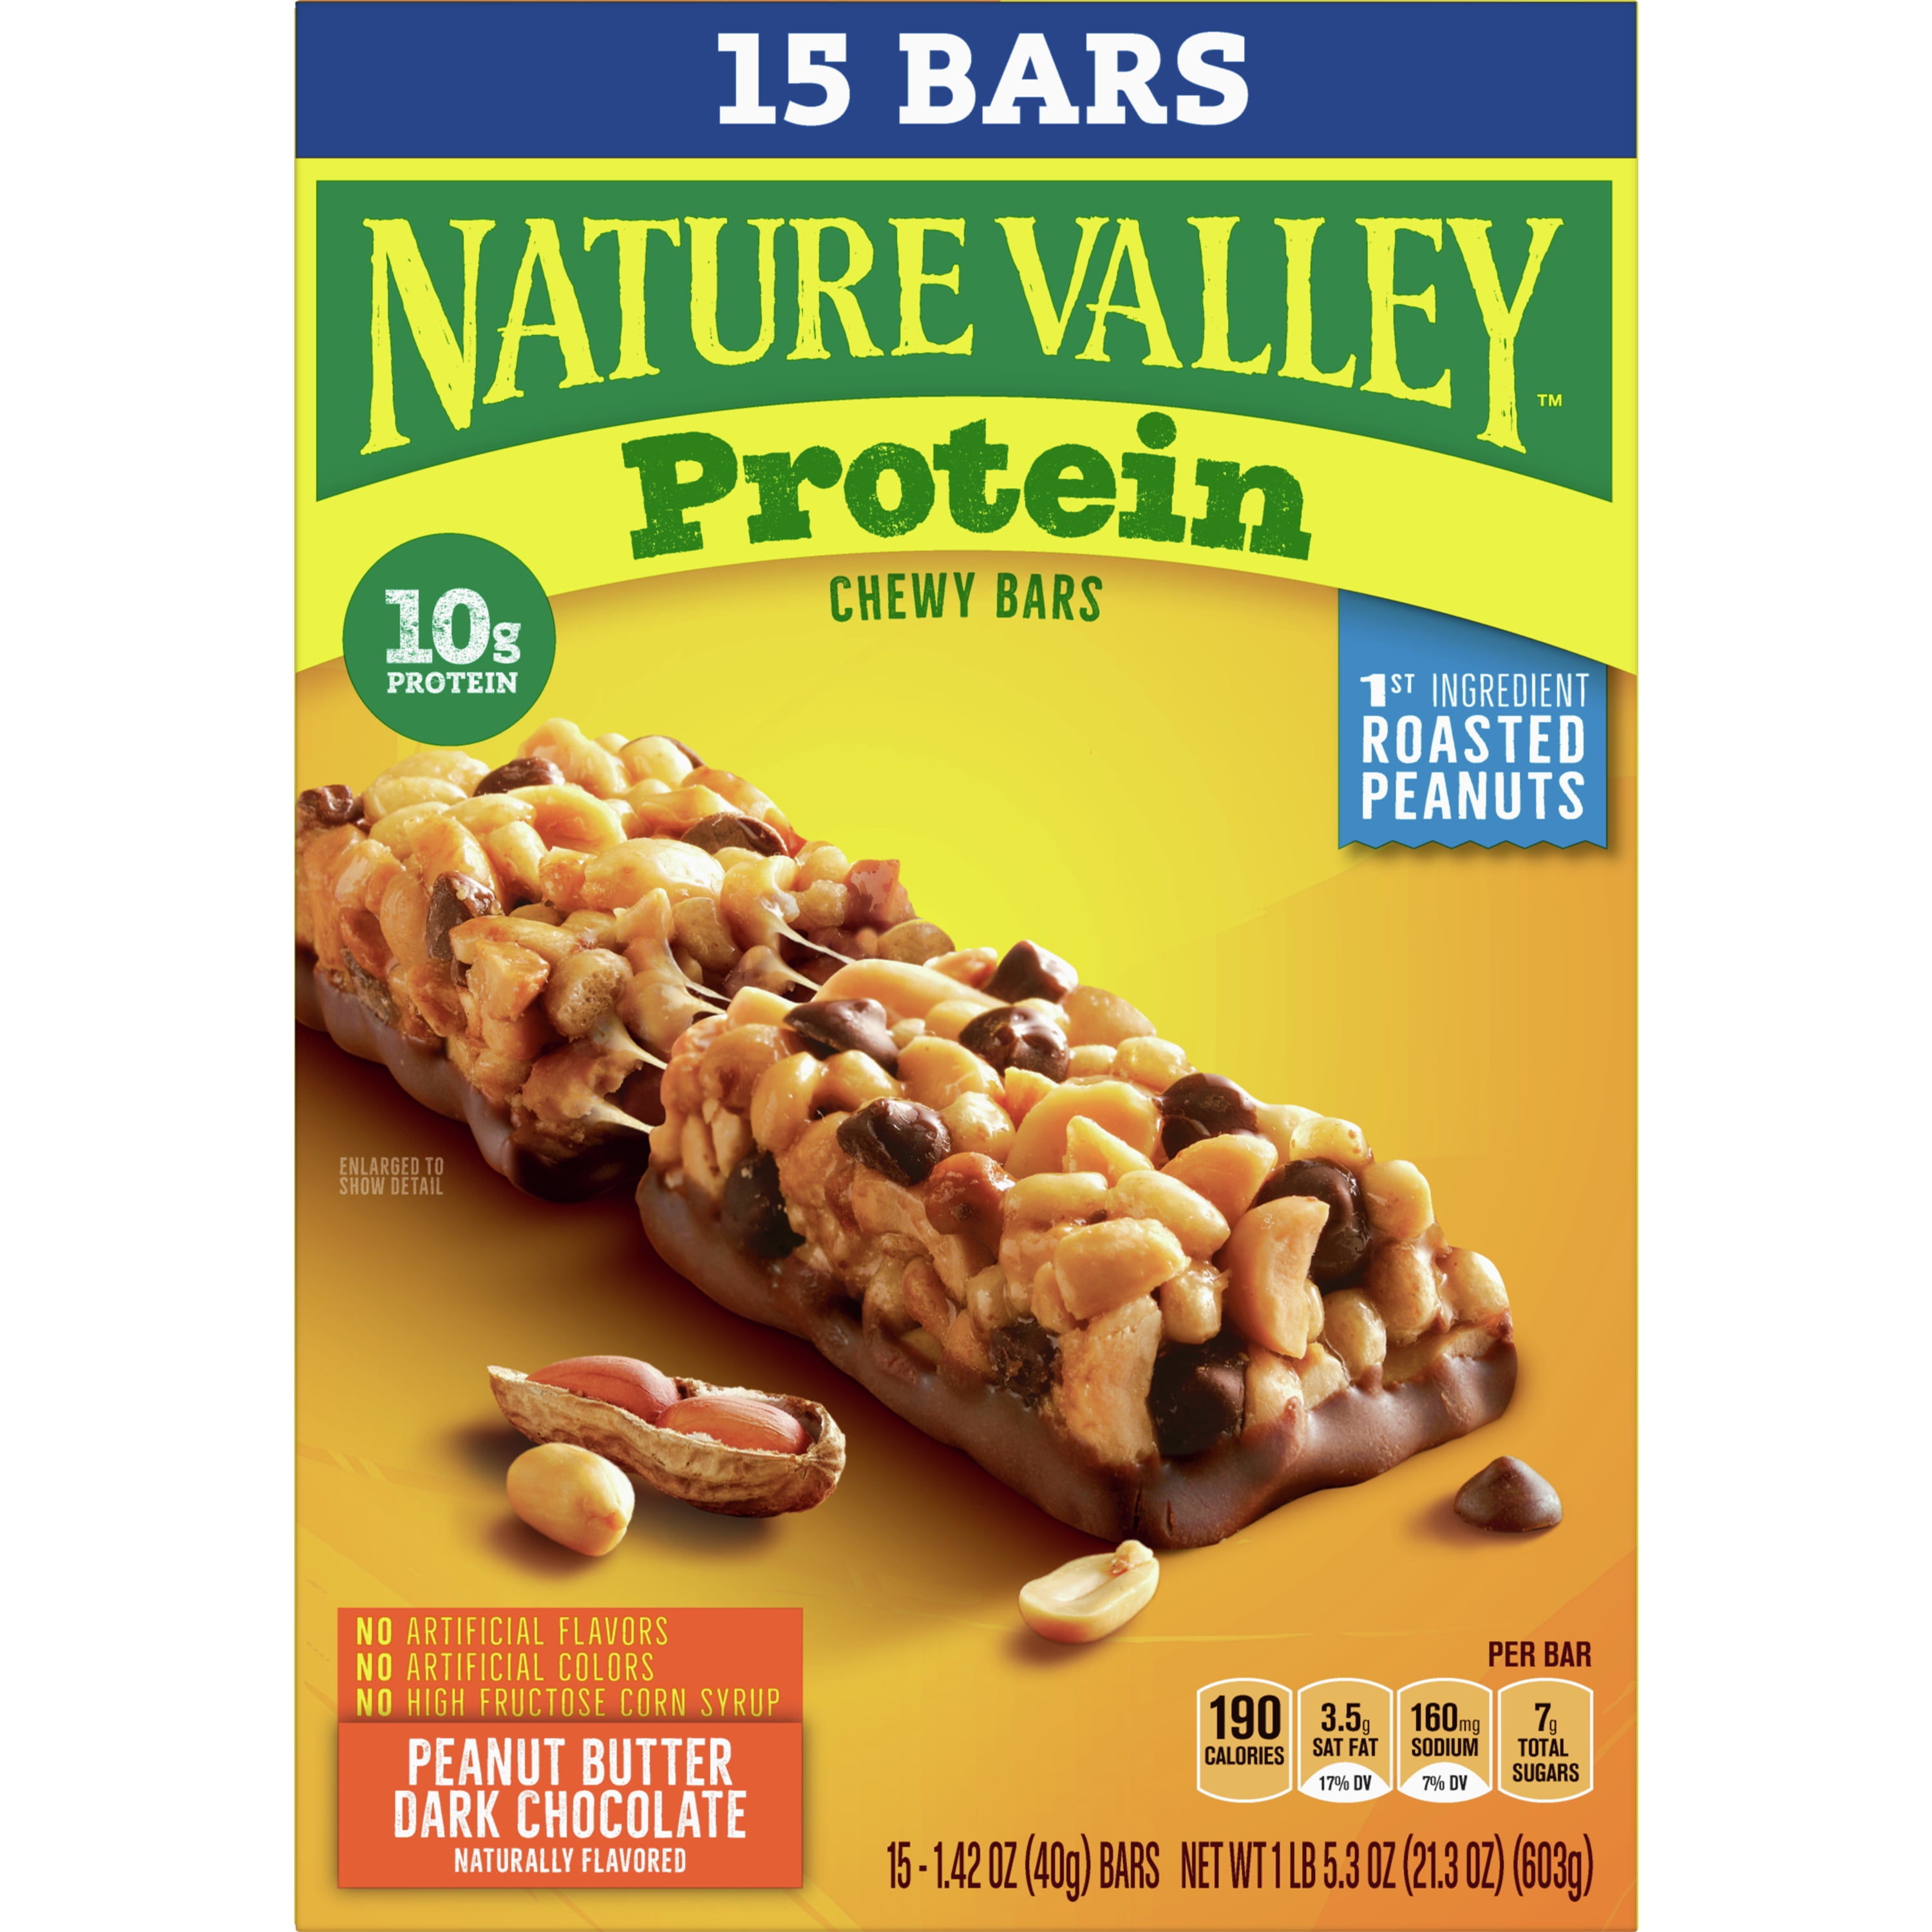 Nature Valley 10g Protein Chewy Granola Bars, Peanut Butter Dark